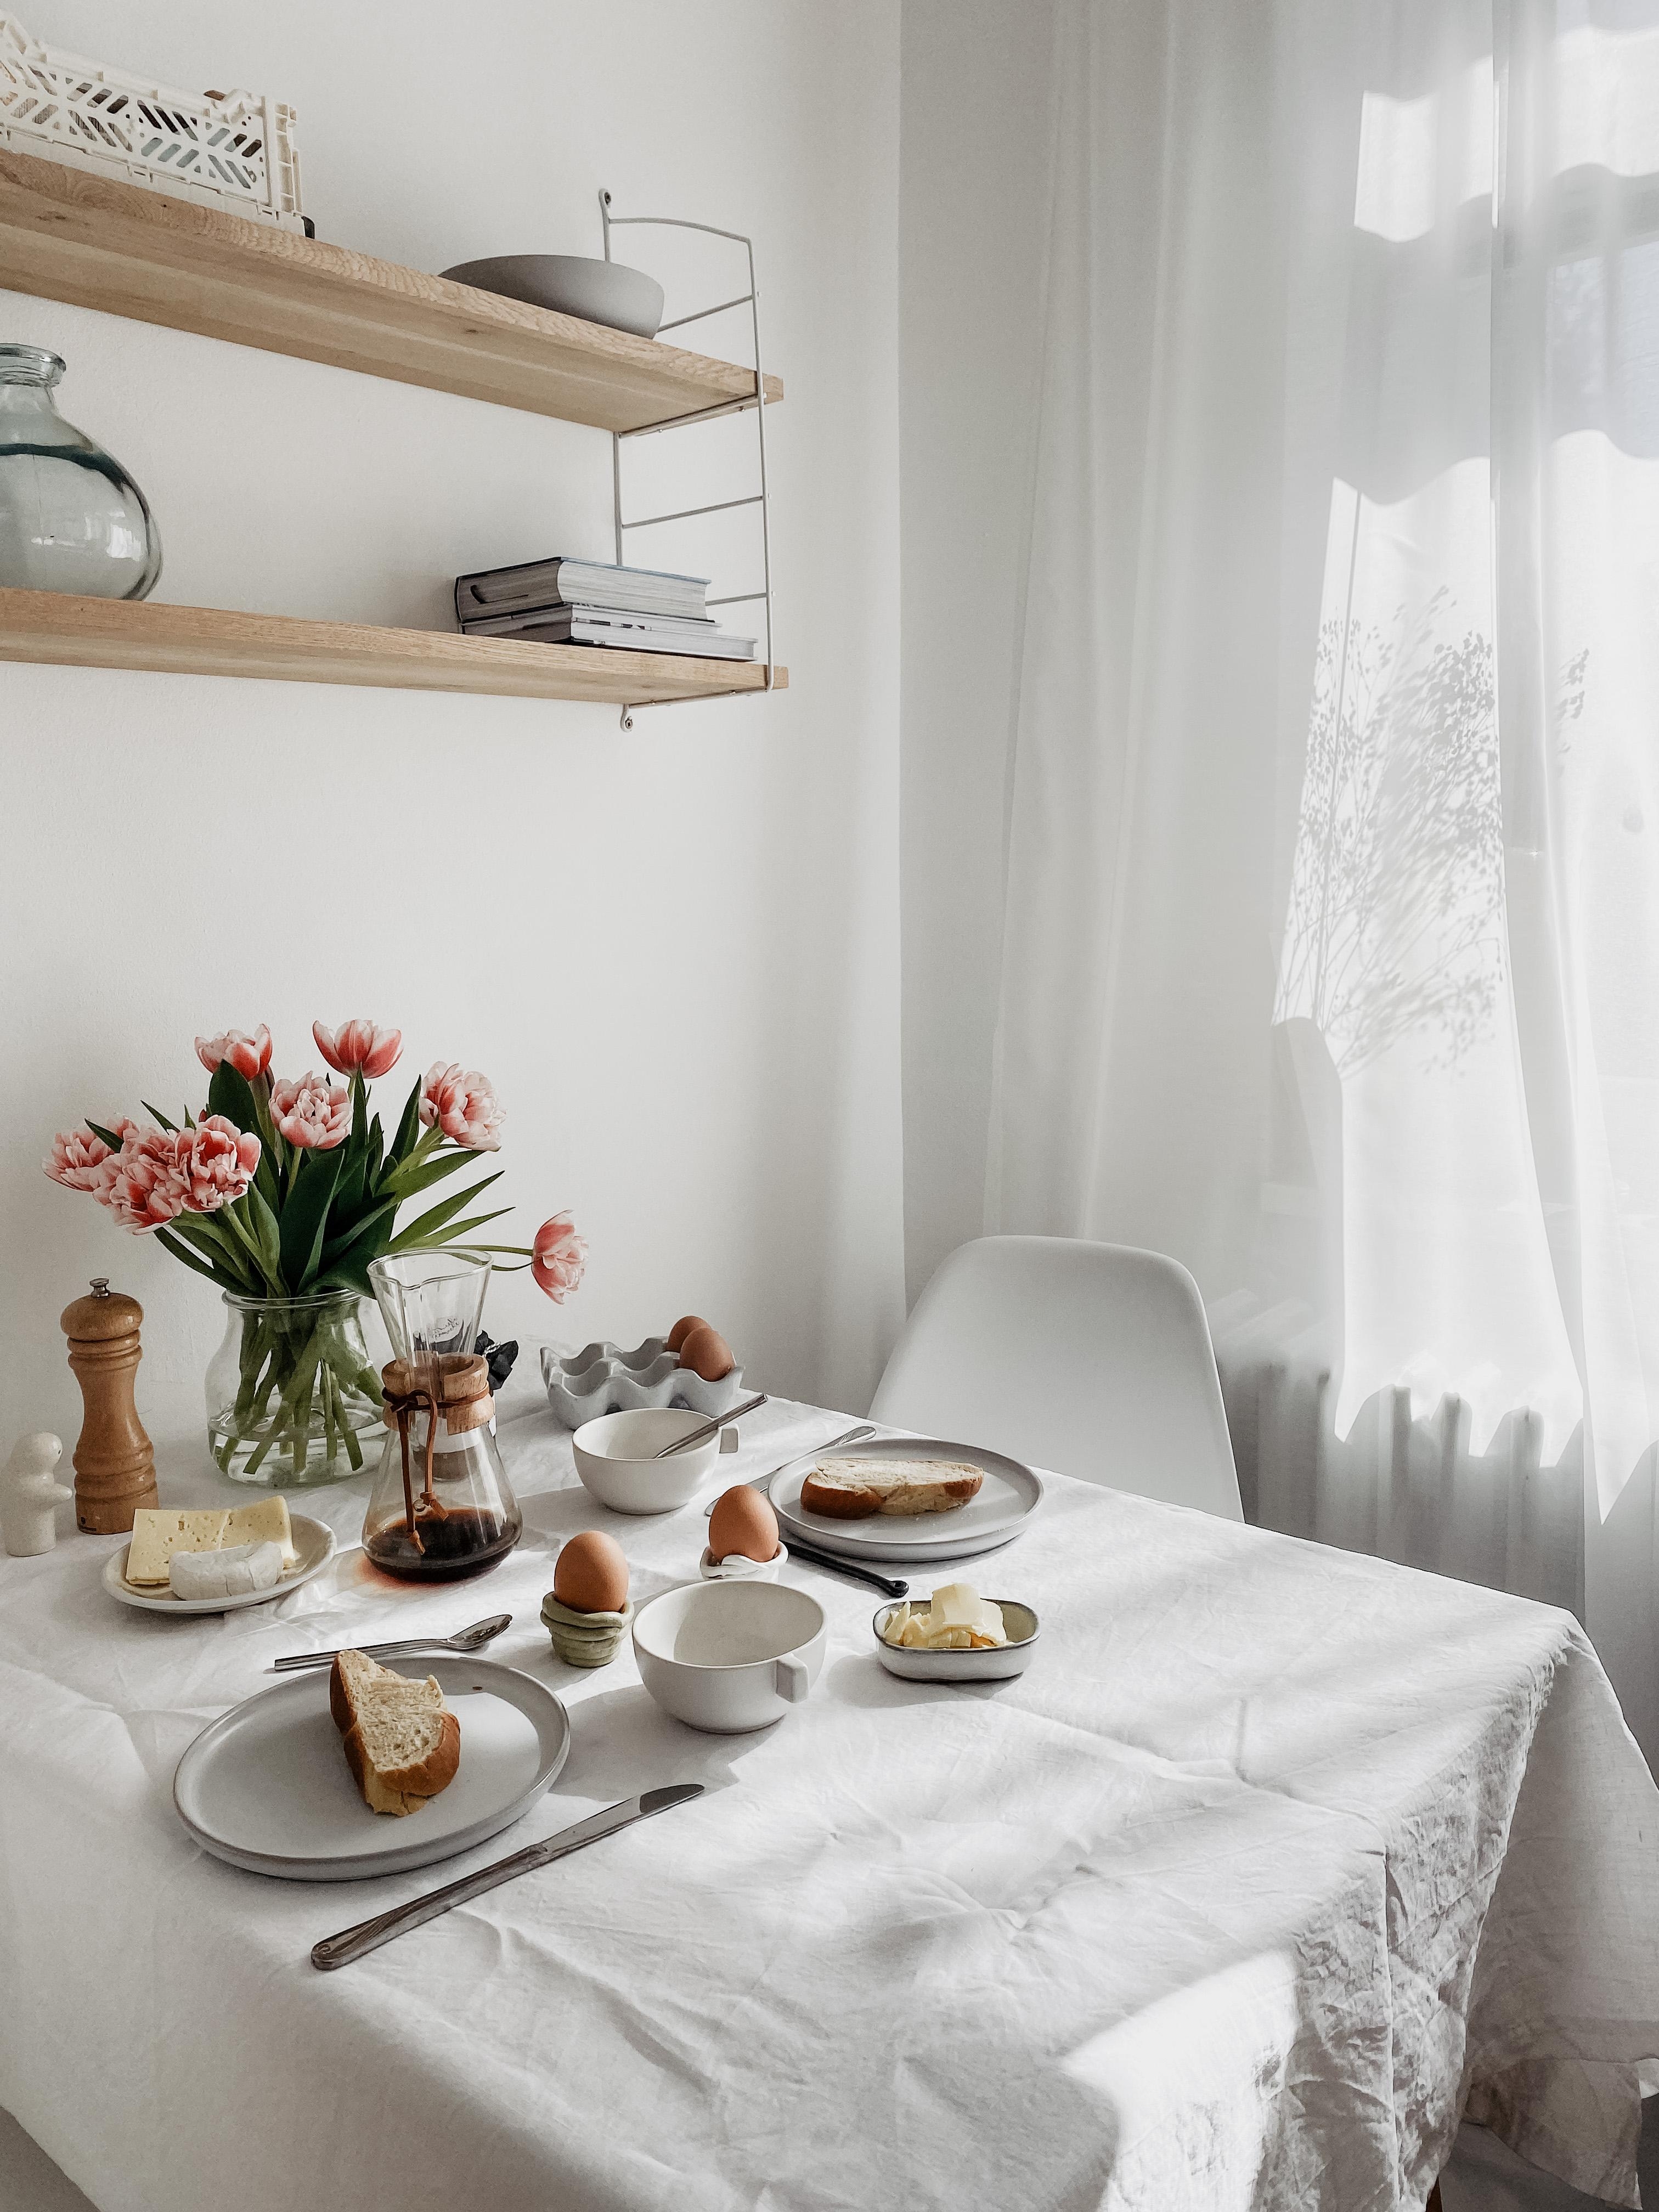 #breakfast #Ostertisch #livingroom #leinenliebe